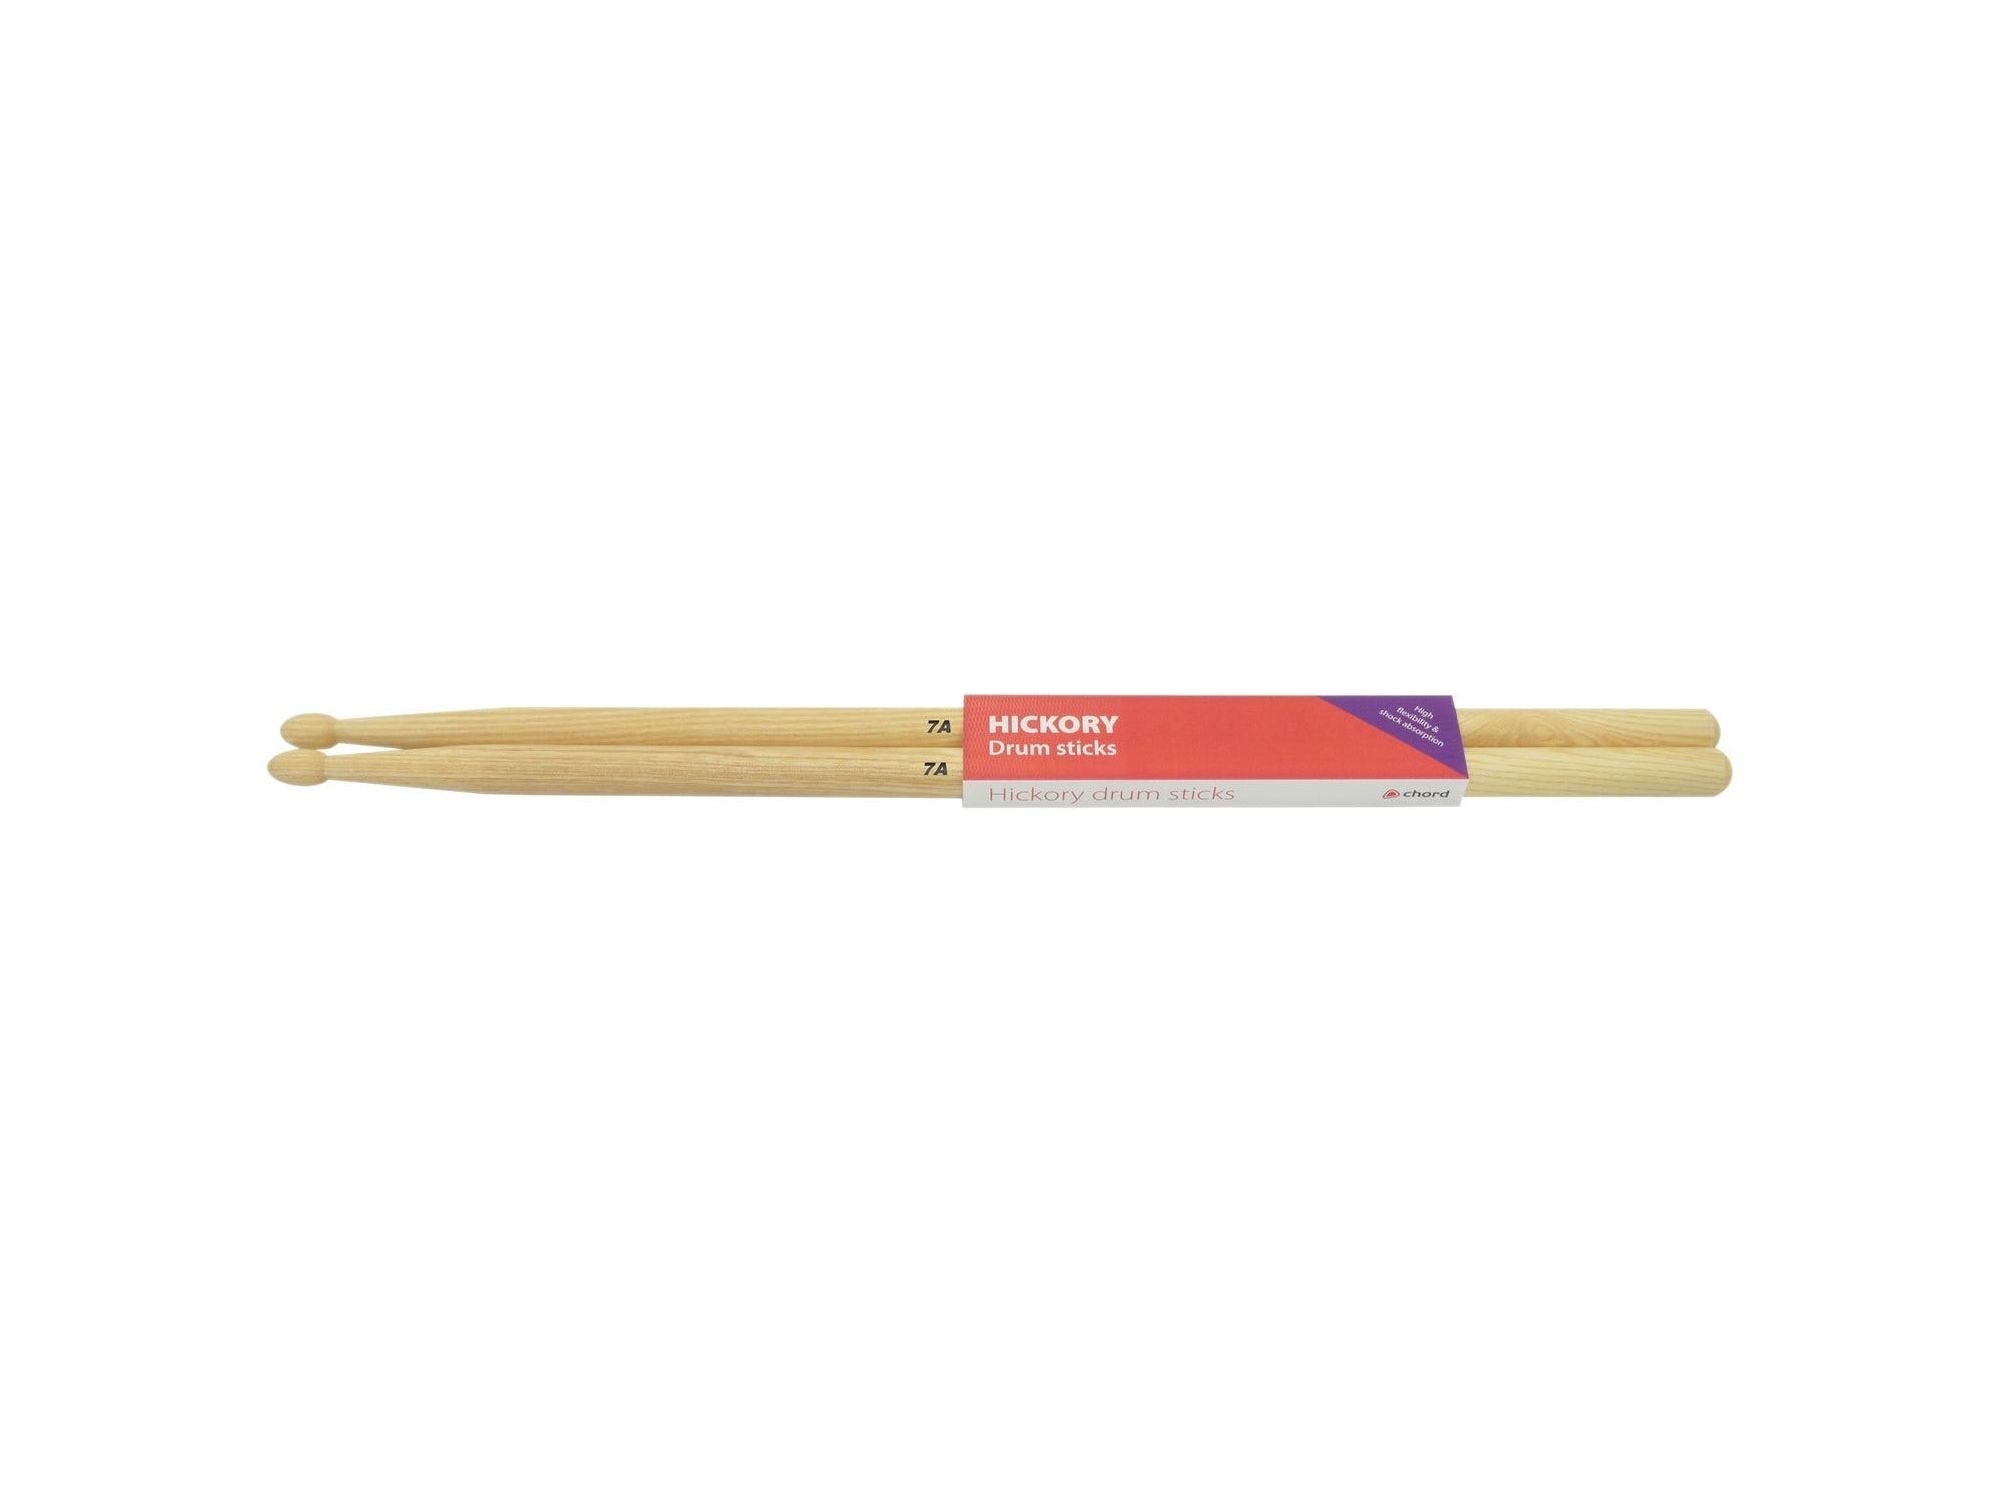 Hickory Drum Sticks - 1 Pair